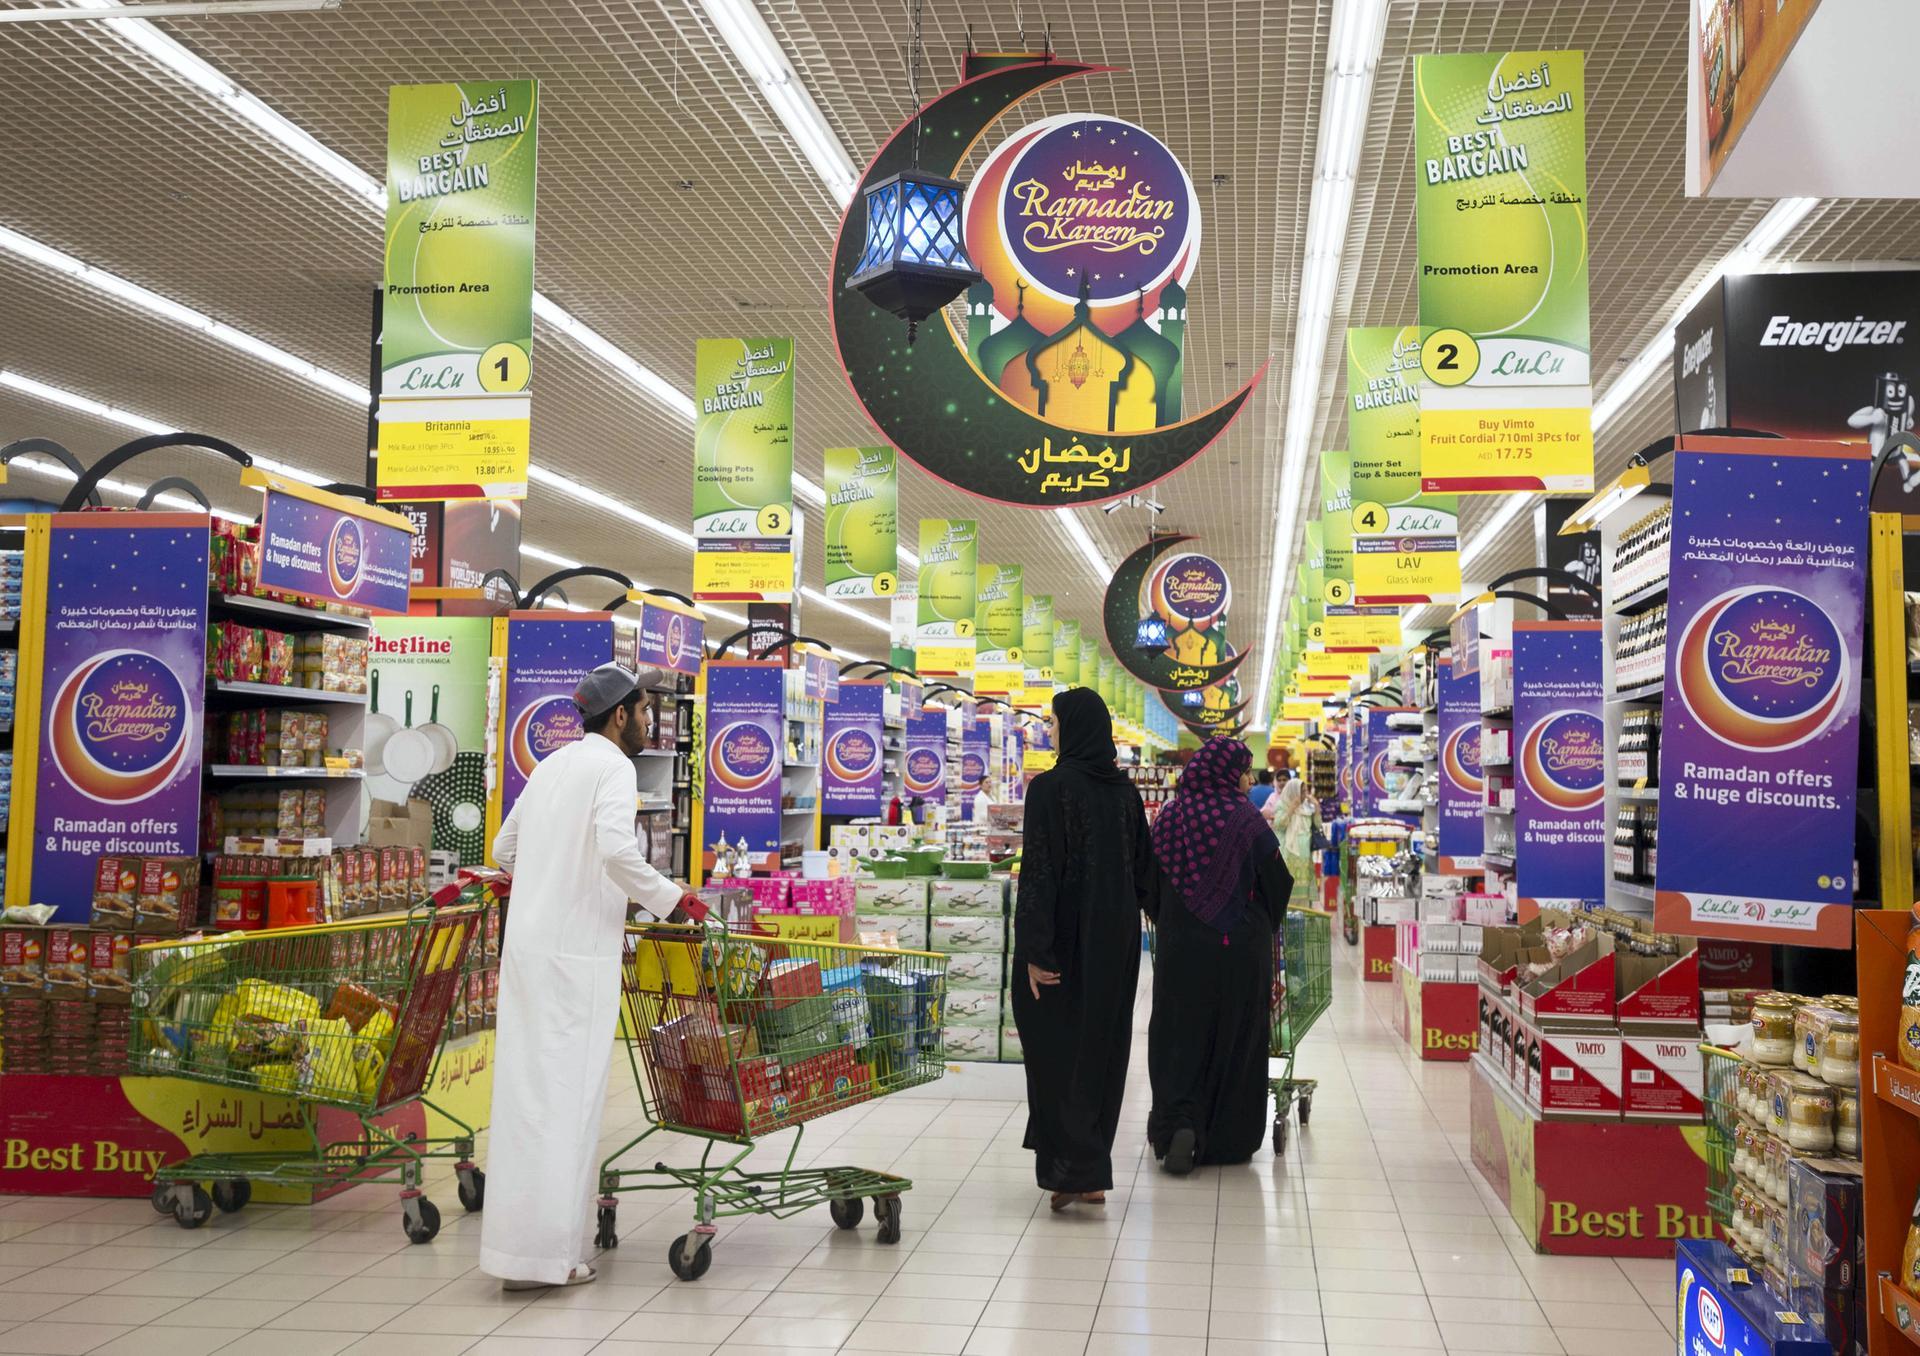 Ramadan 2018: Last minute rush shows UAE shopping habits are changing